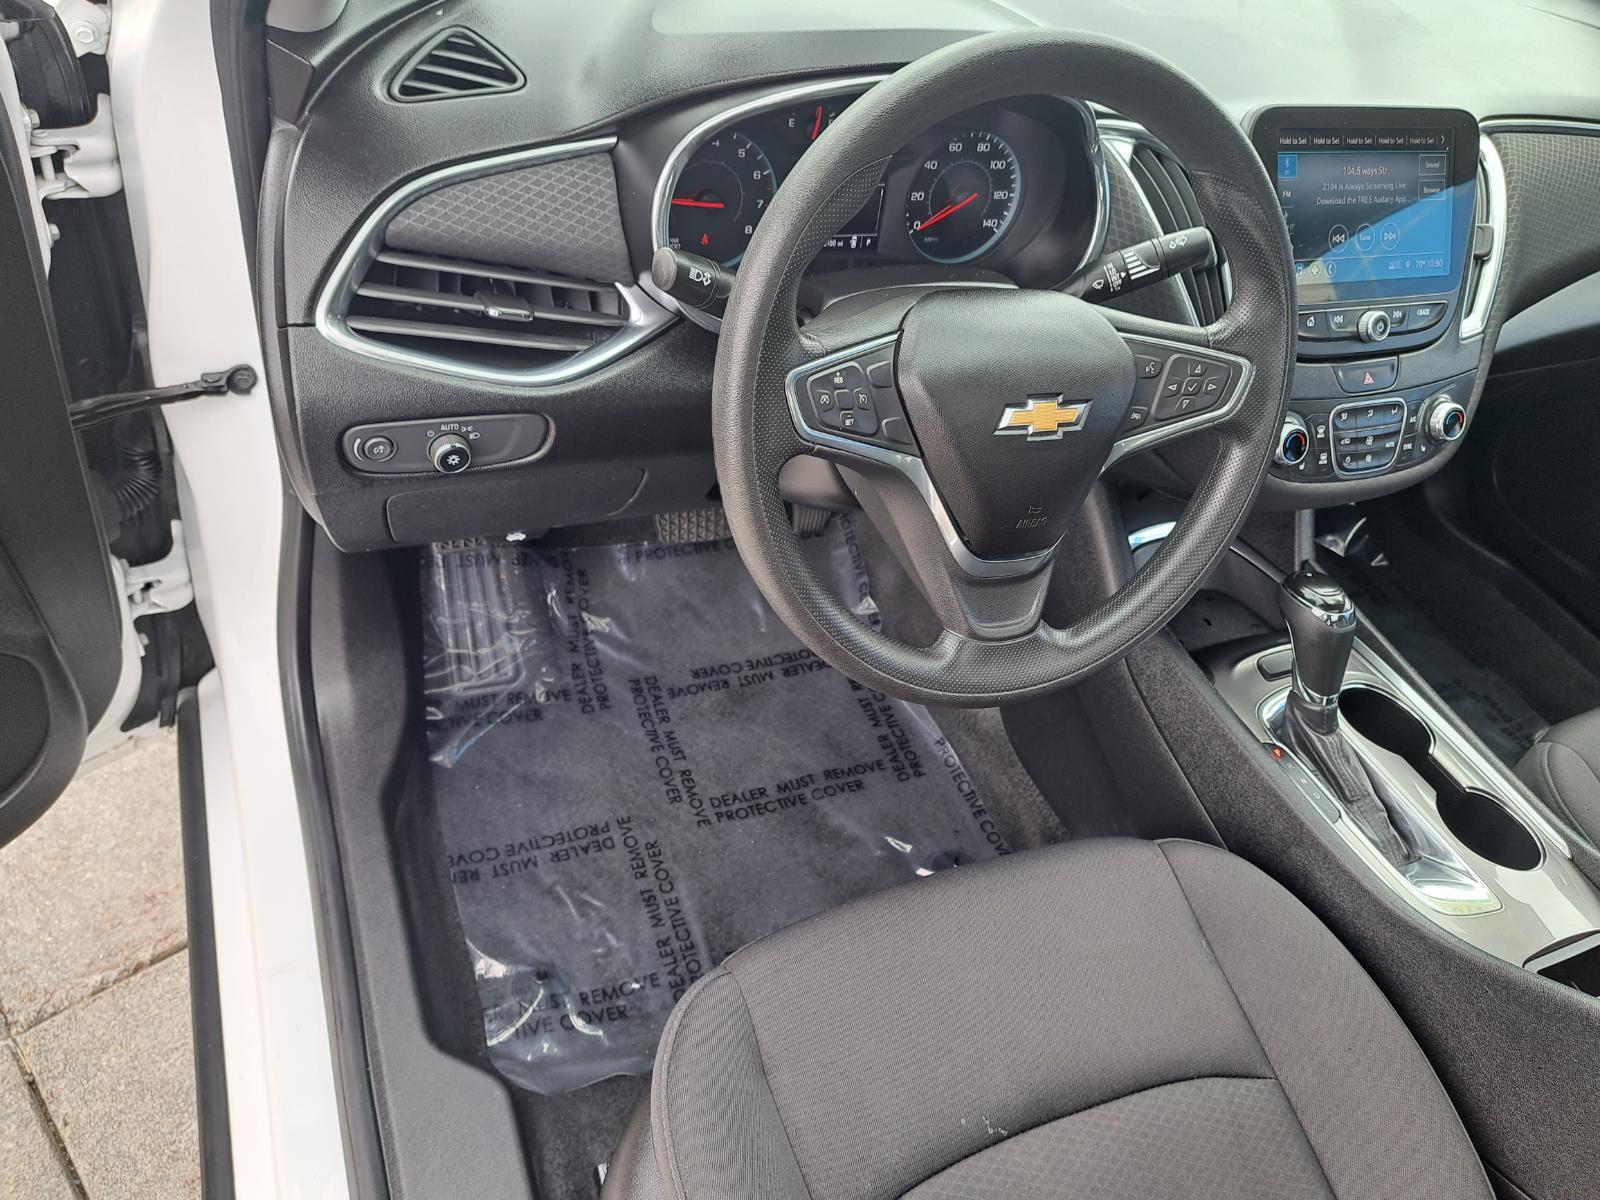 2019 Chevrolet Malibu LT Sedan 4 Dr. Front Wheel Drive mobile thumbnail 5